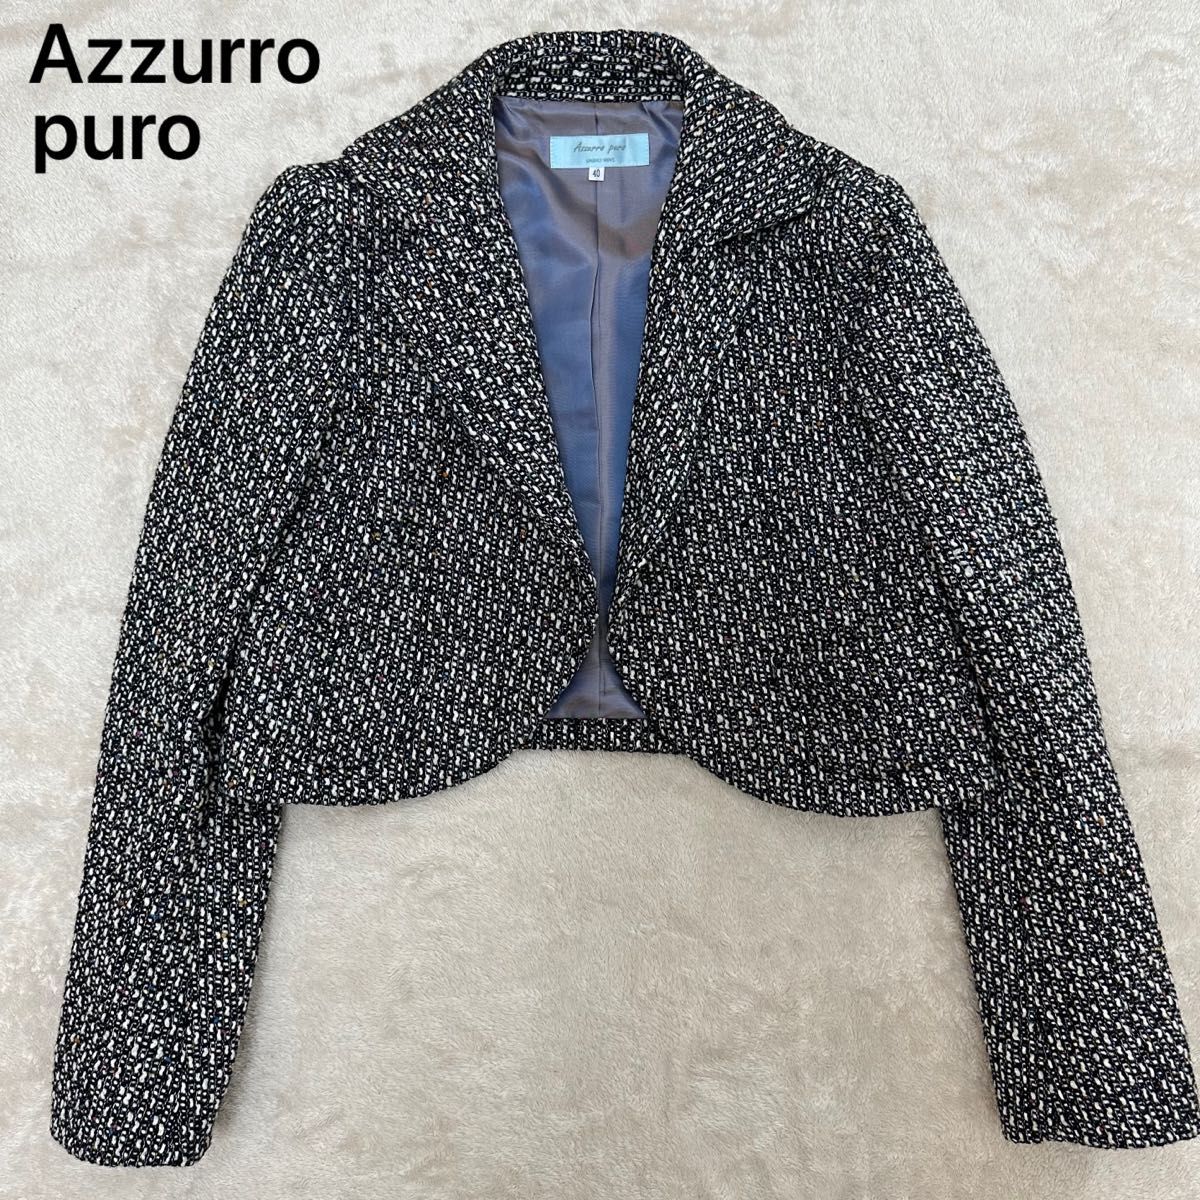 Azzurro puro アズーロプーロ UNDICI-NOVE ウンディッチ・ノーベ  テーラード ツイード ジャケット 40